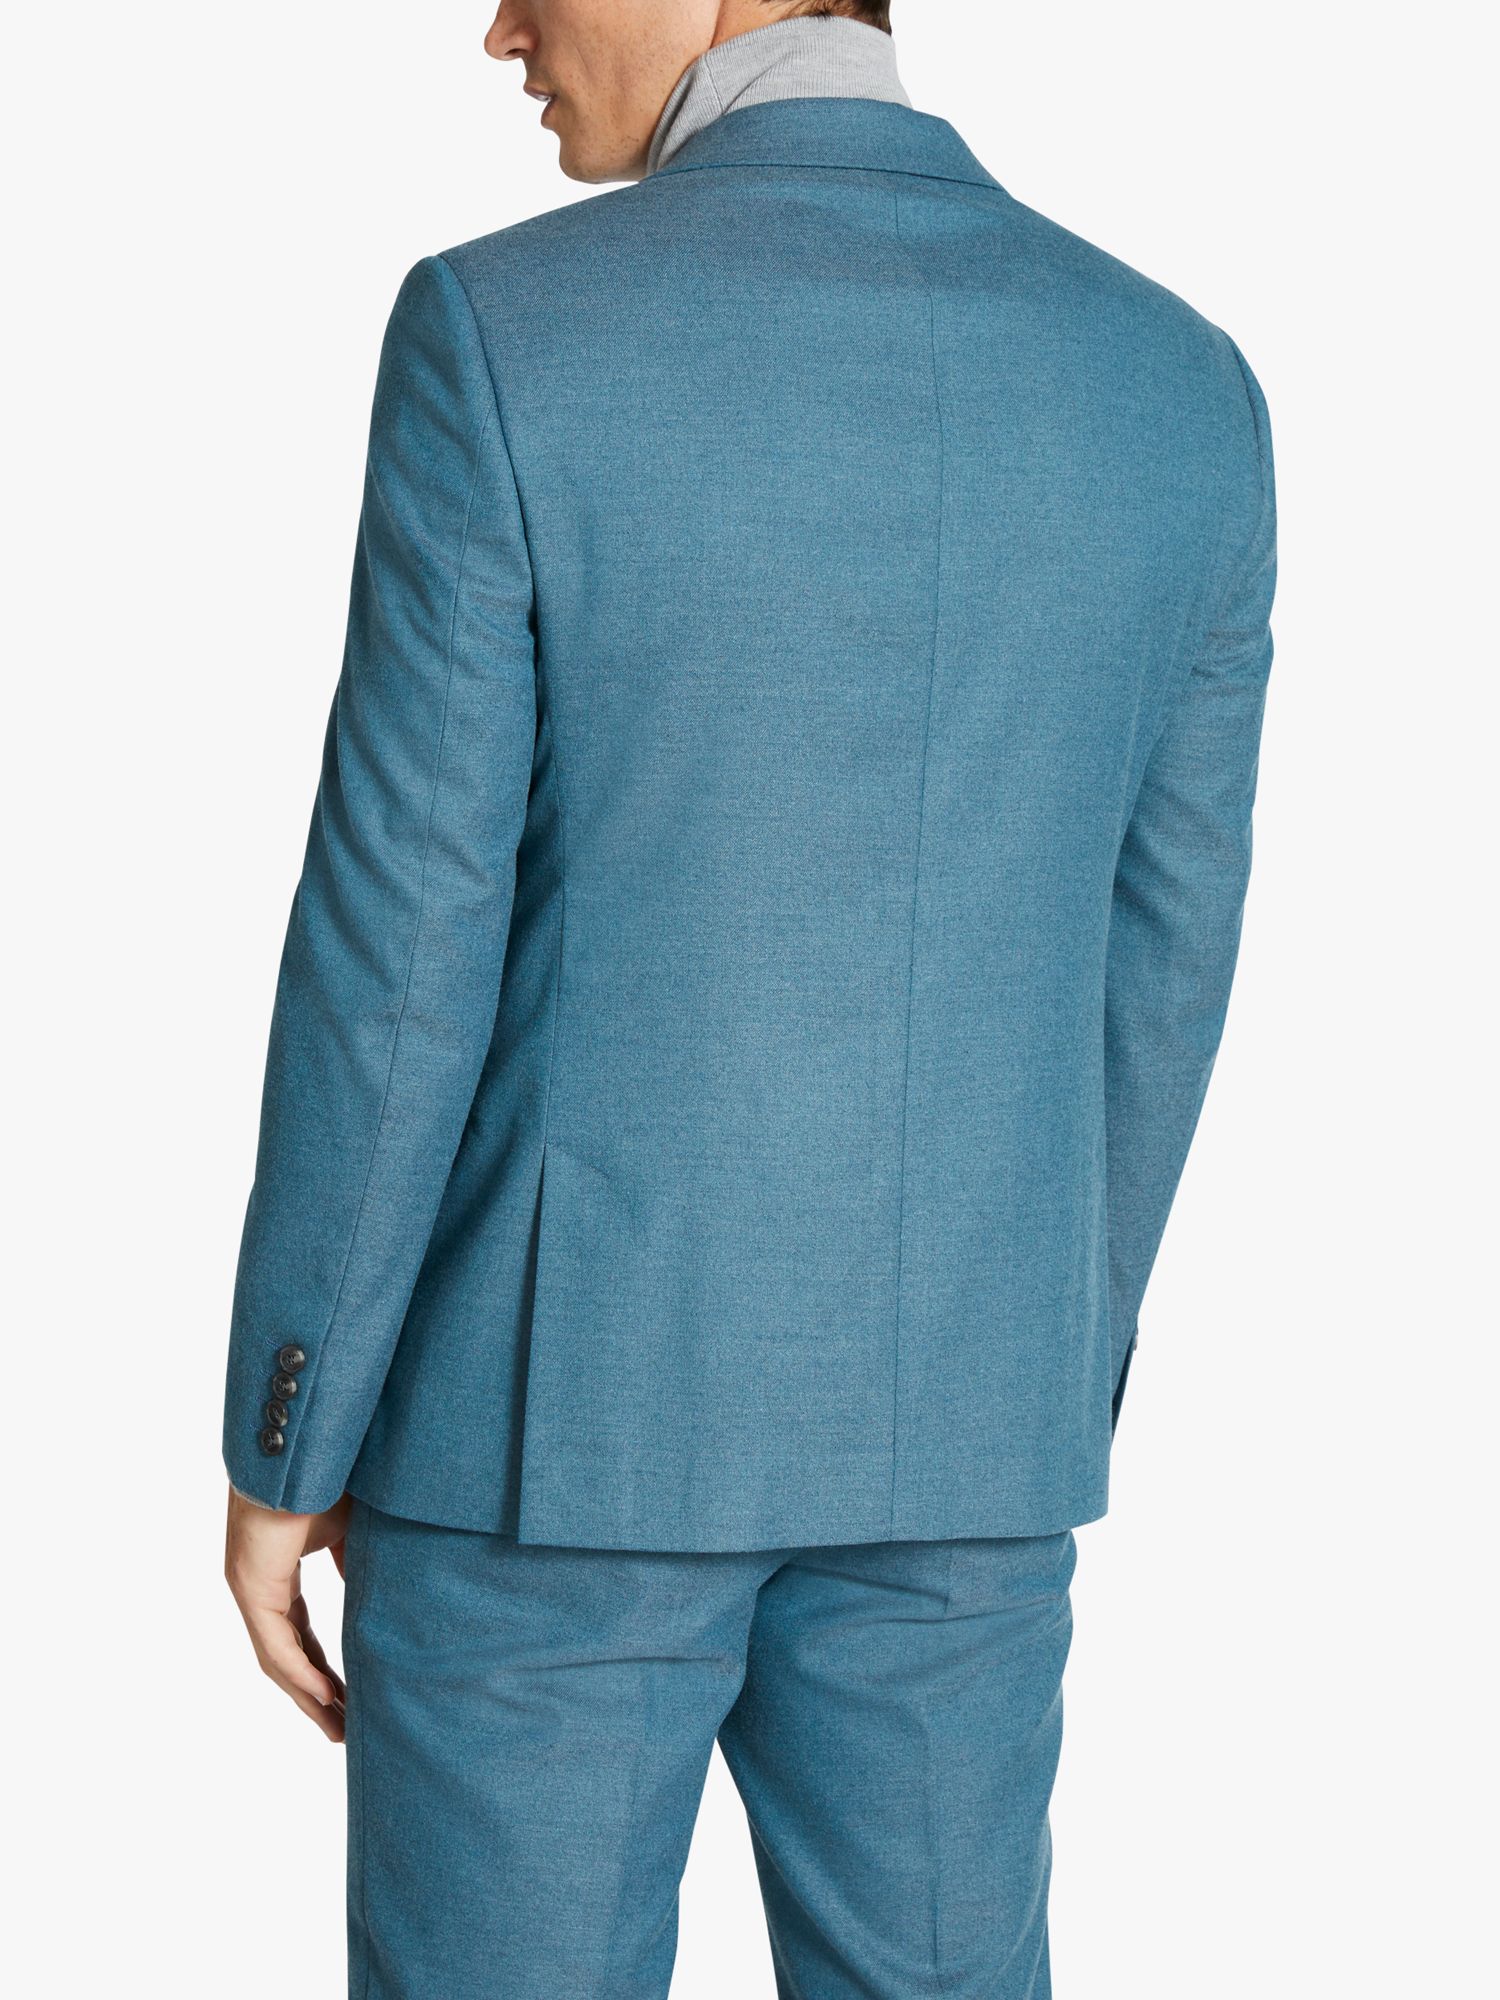 Moss Slim Fit Flannel Suit Jacket, Teal at John Lewis & Partners